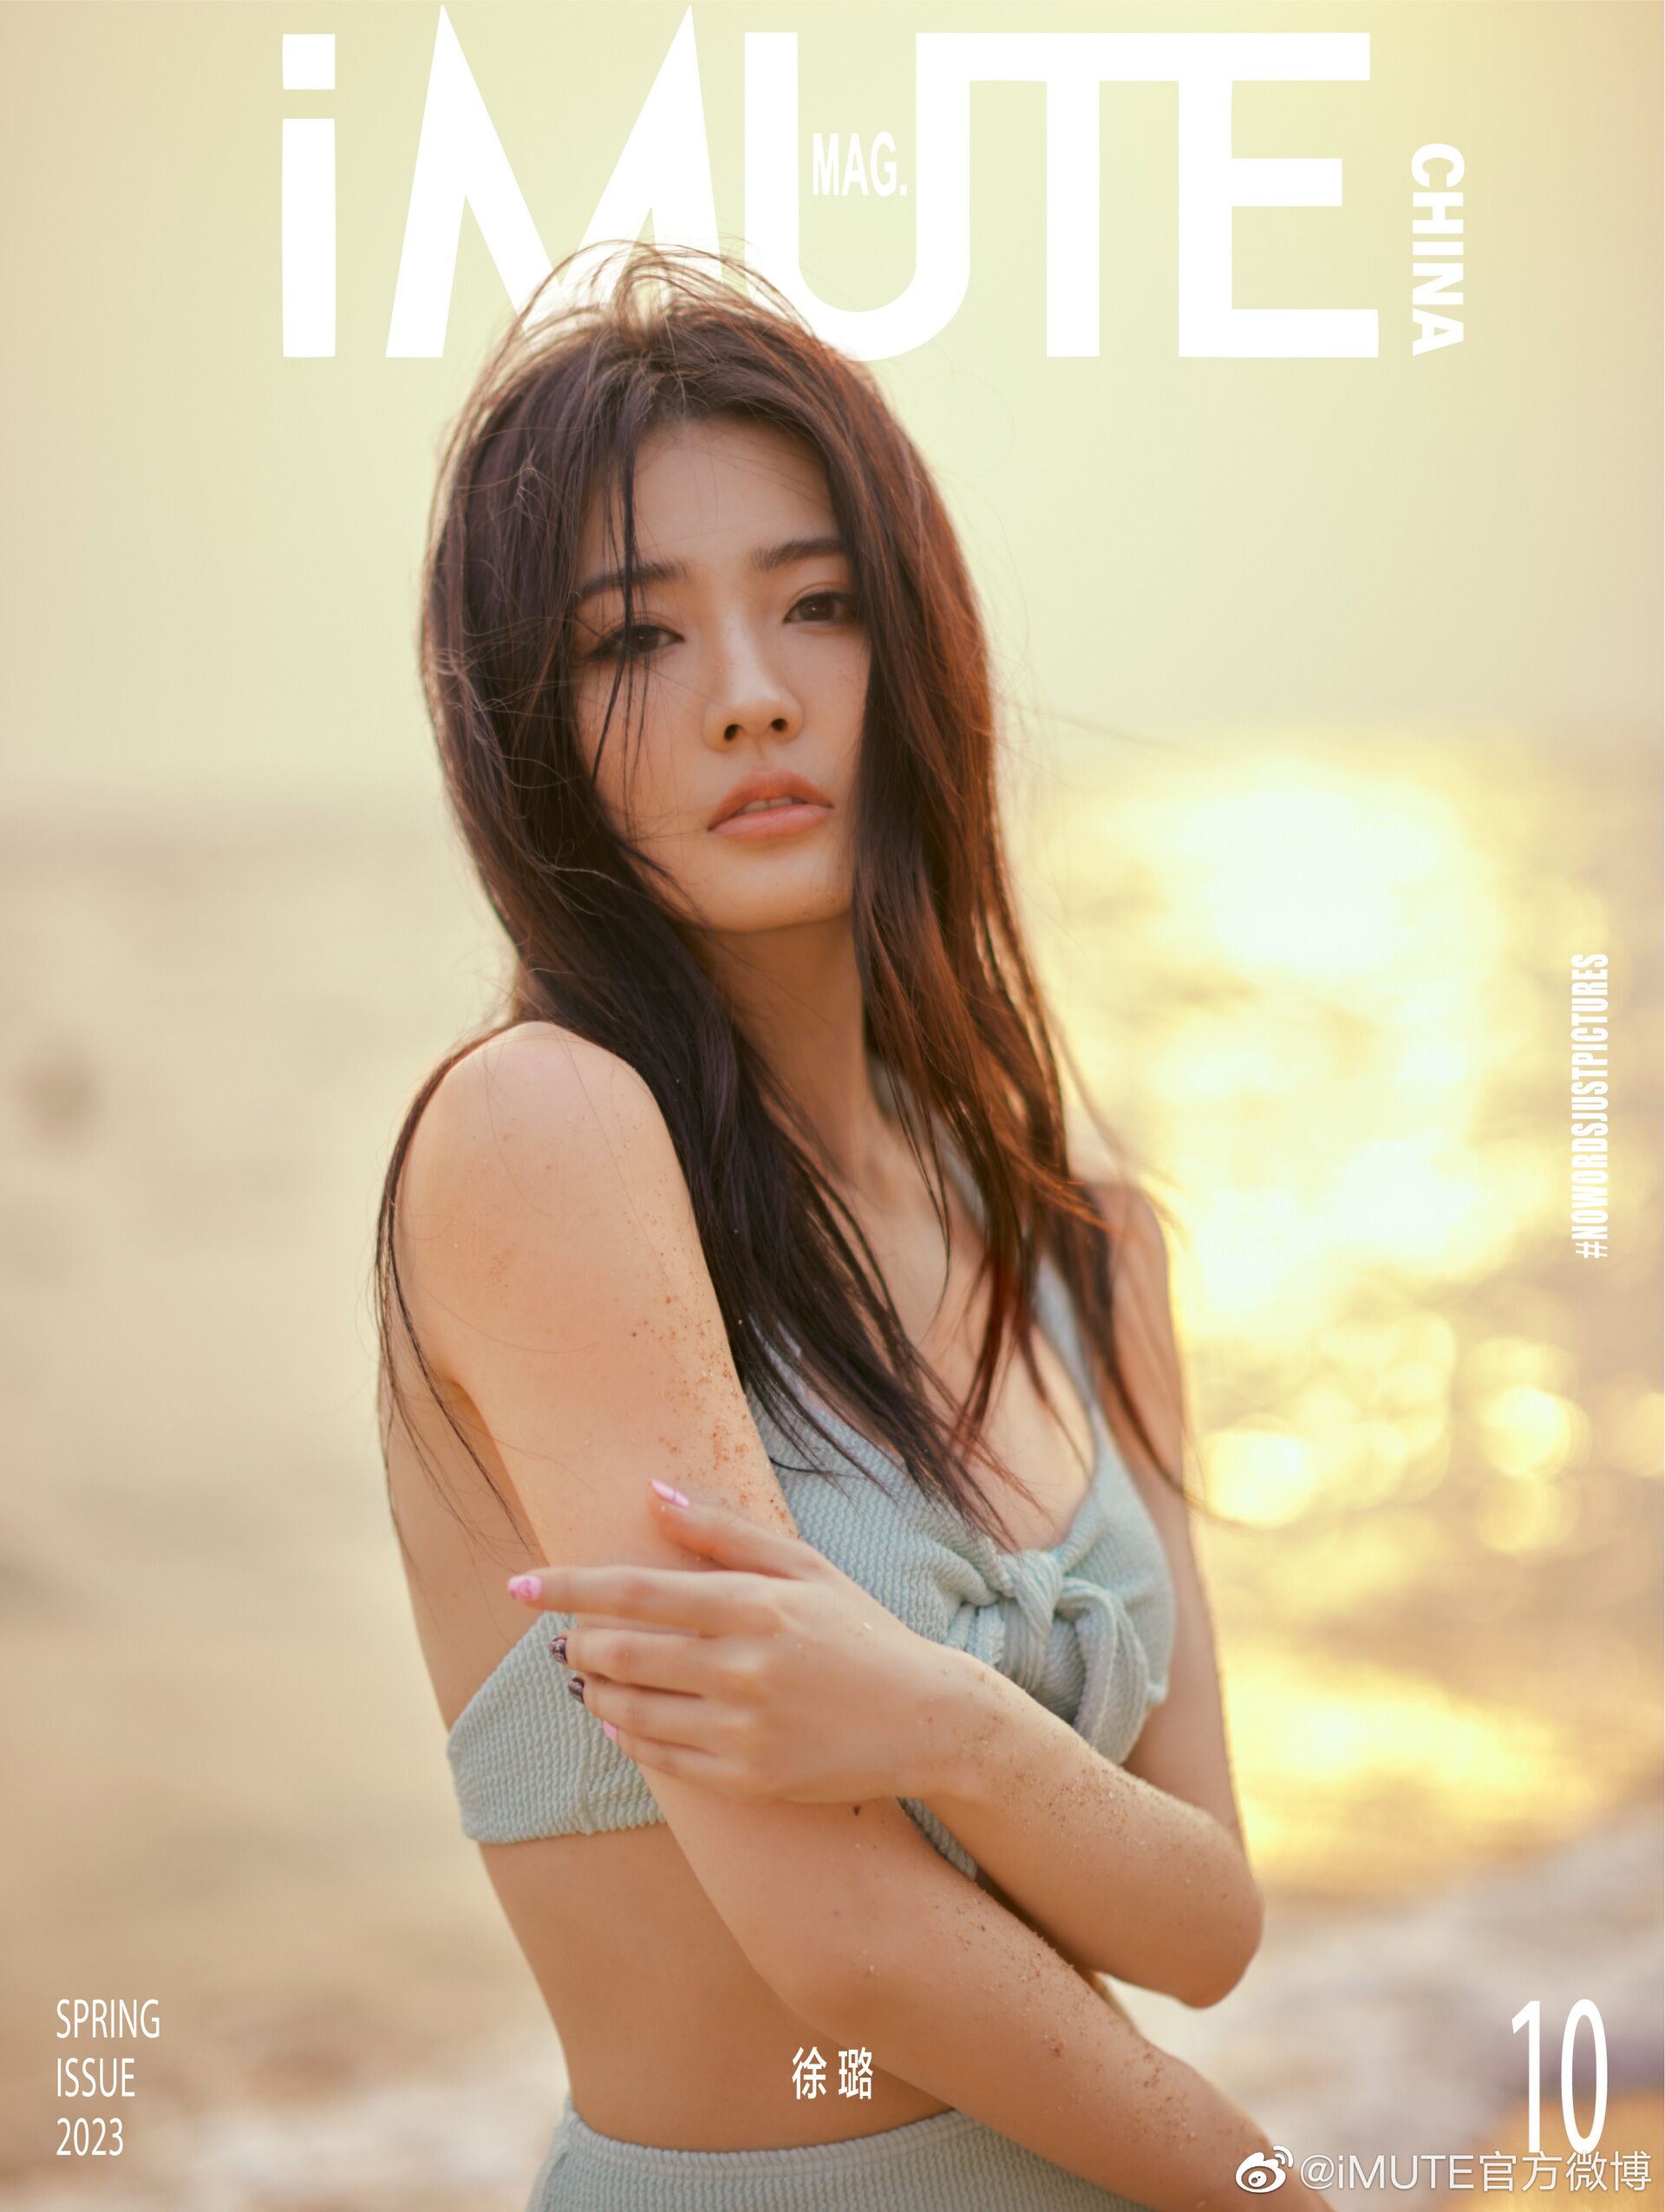 Xu Lu Magazine Cover